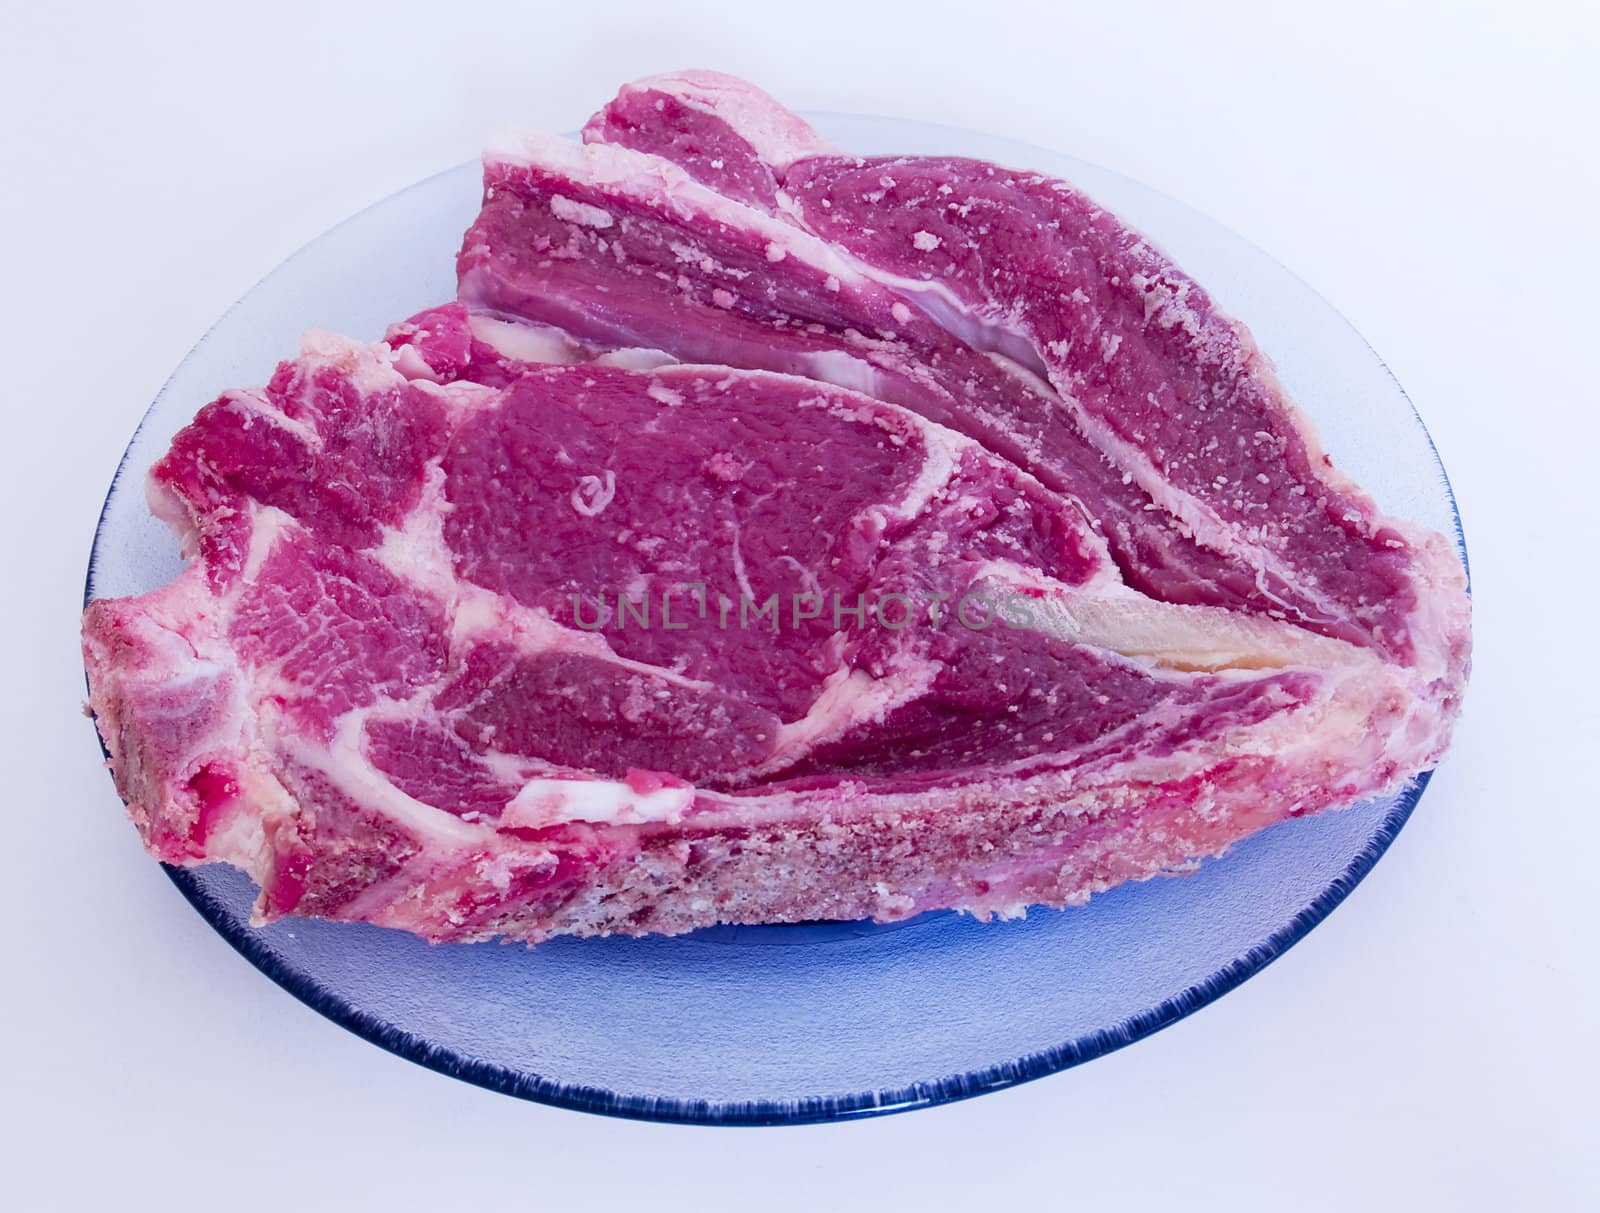 Ribeye Steak by lauria